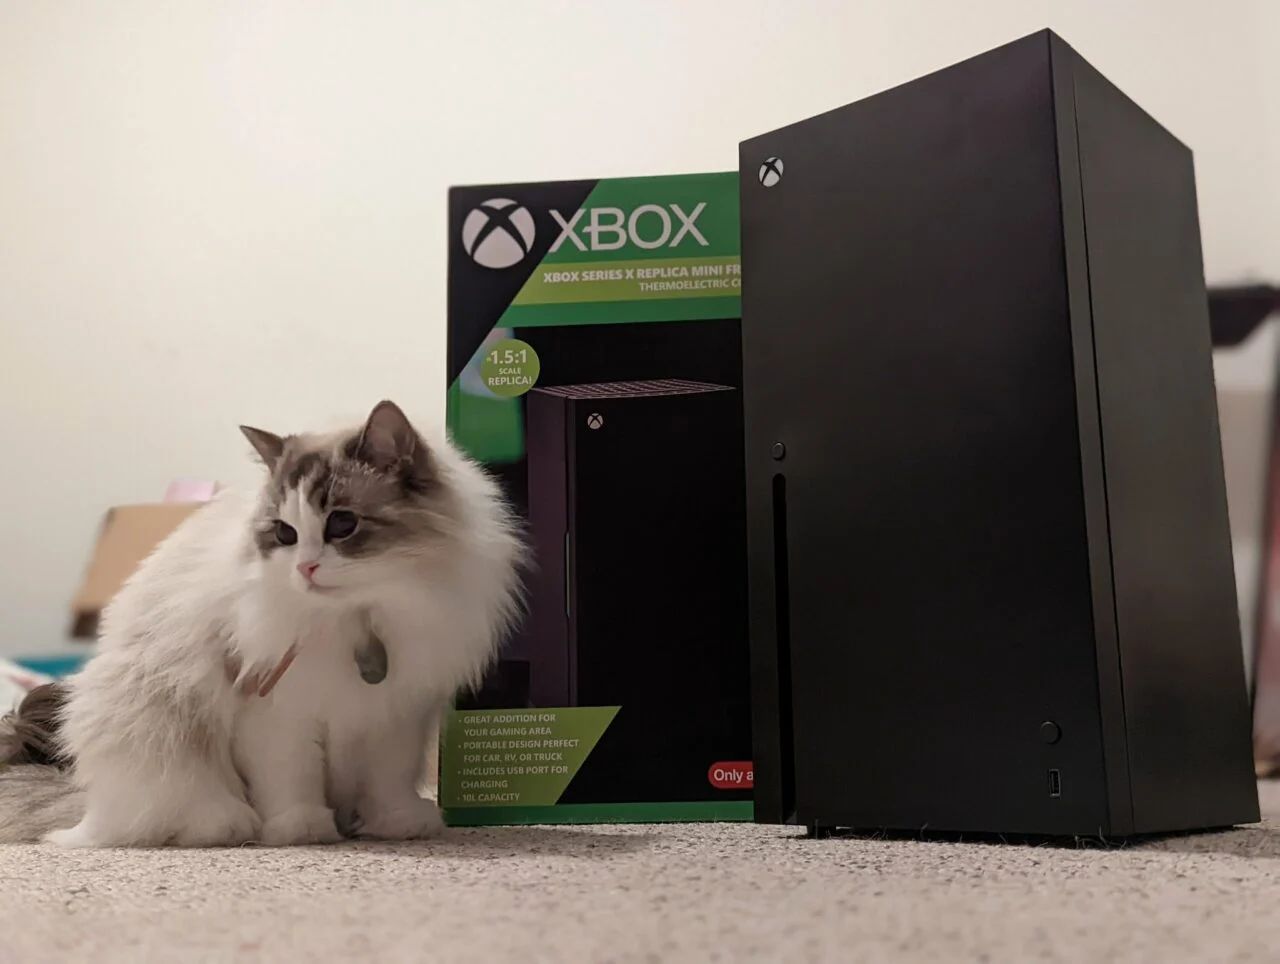 Холодильник в форме Xbox Series X. Источник: twitter.com